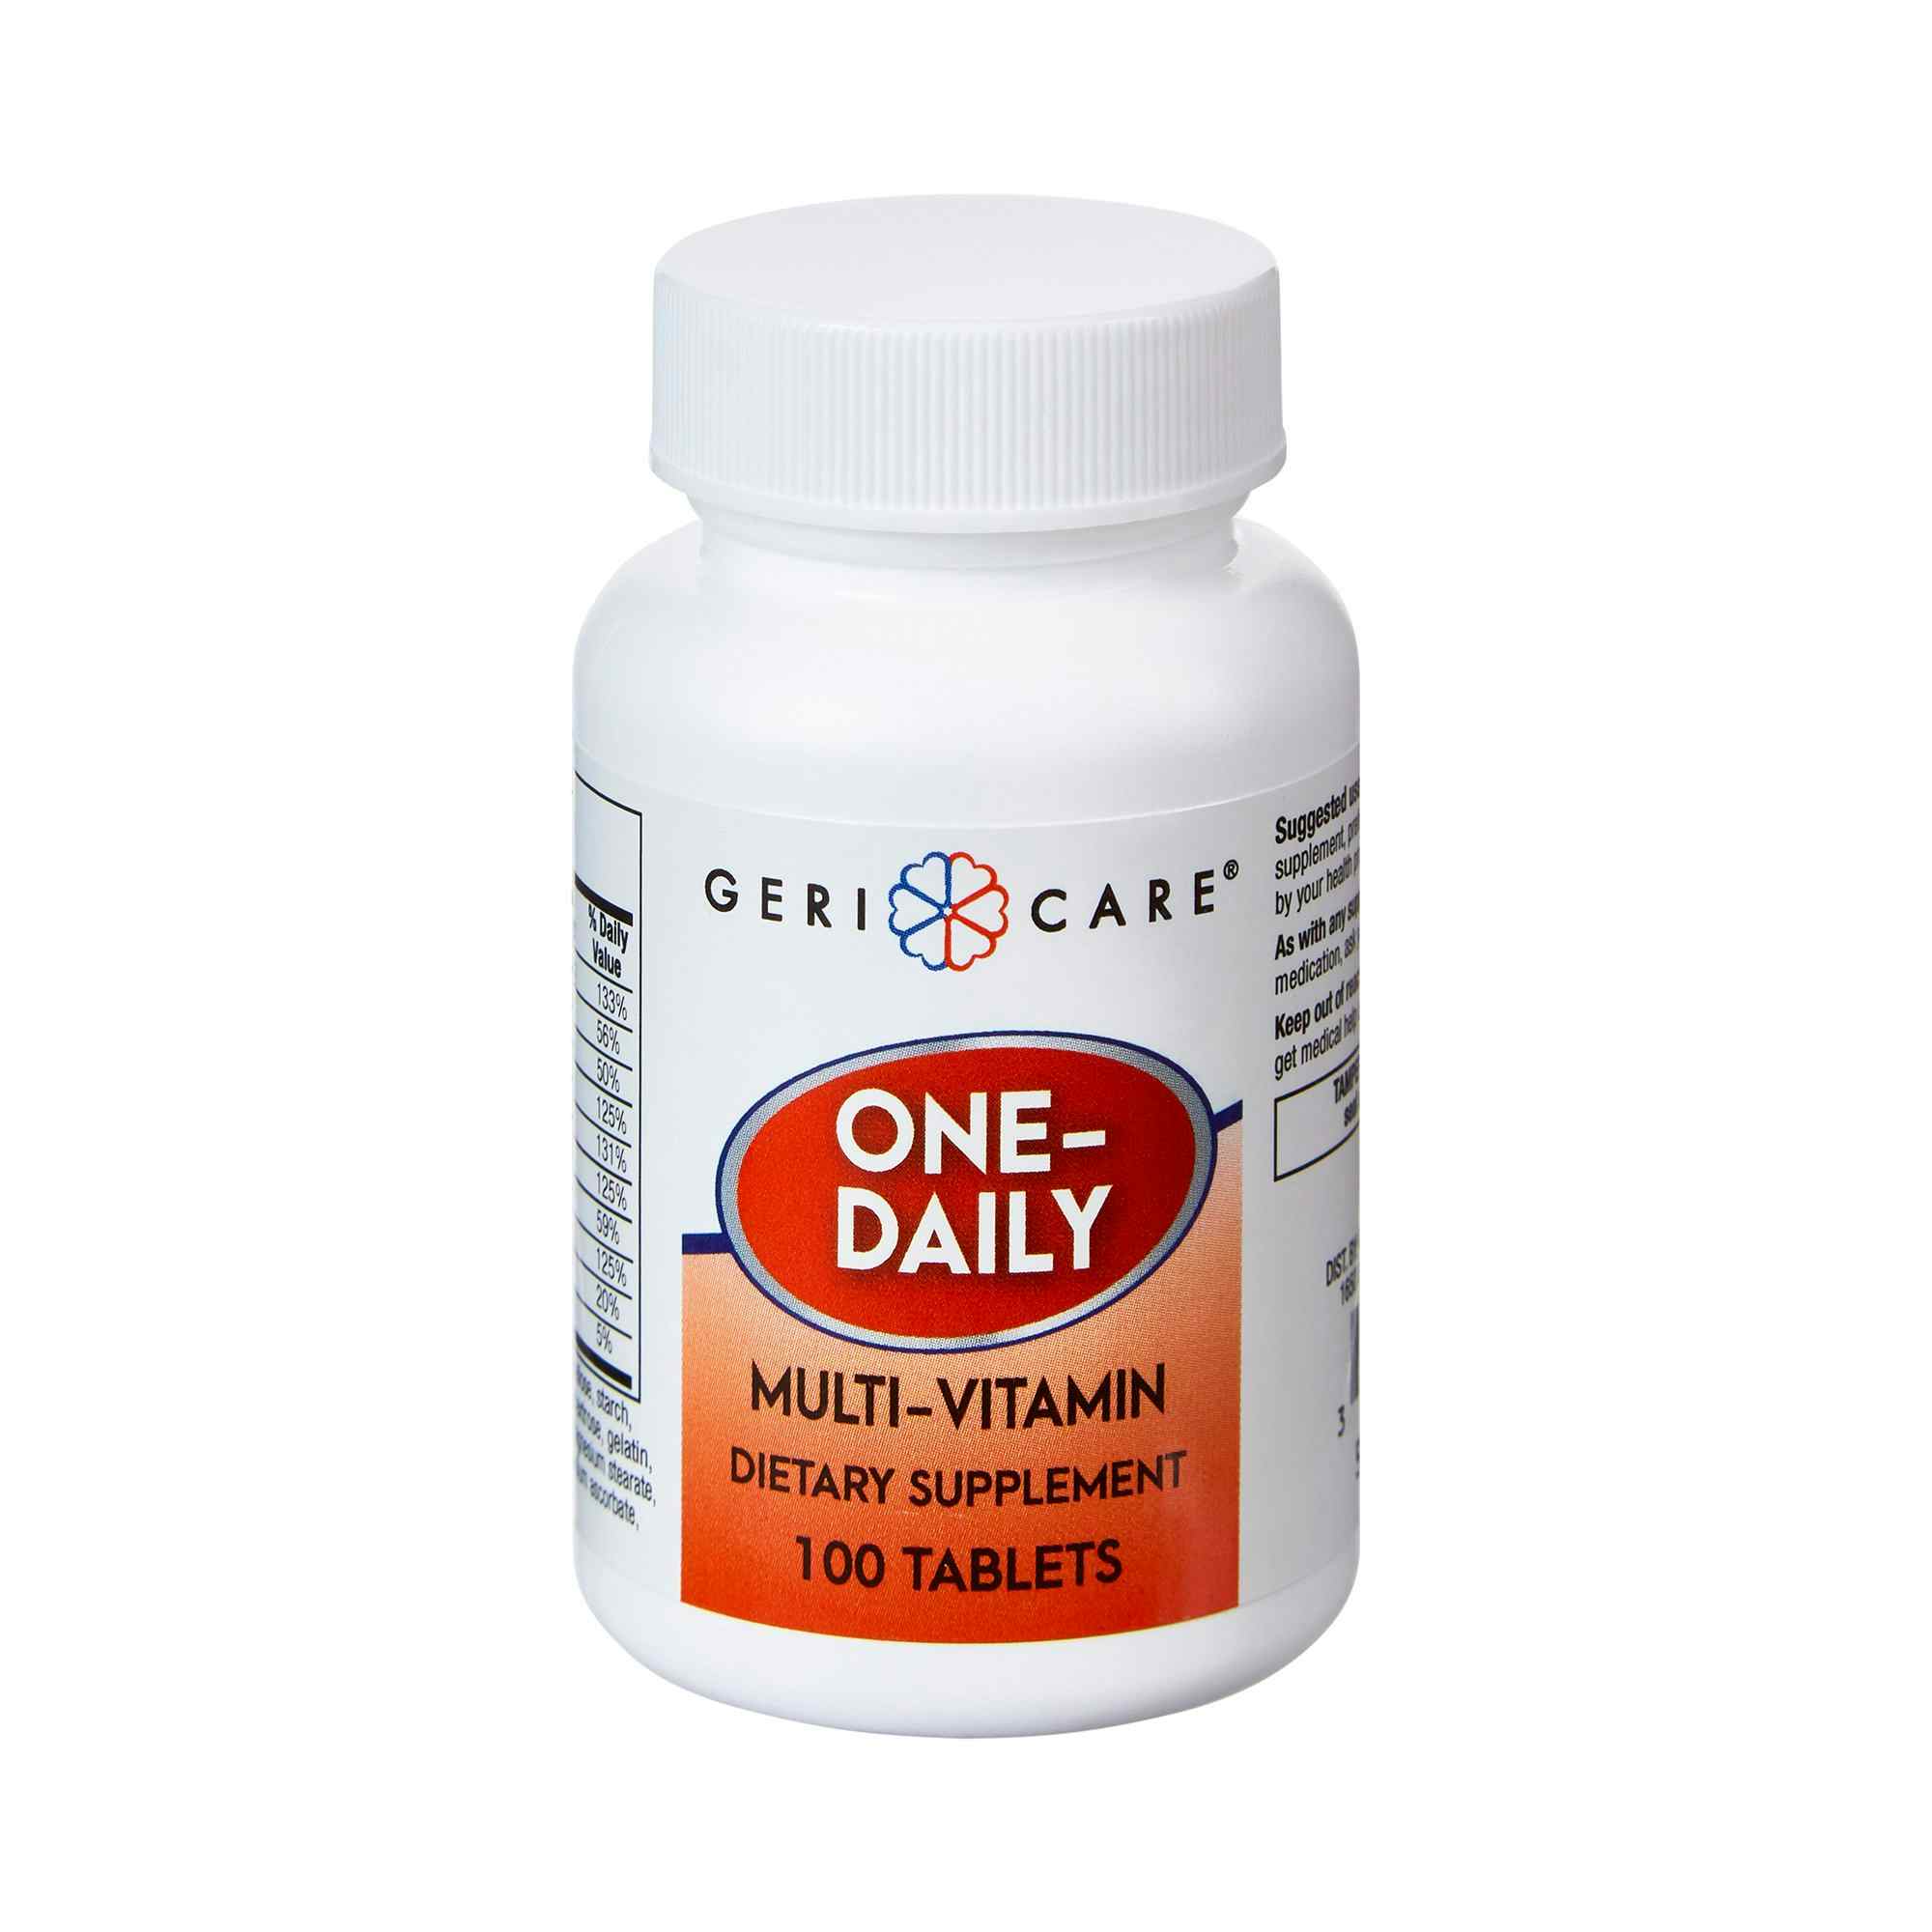 Geri-Care One-Daily Multi-Vitamin Dietary Supplement